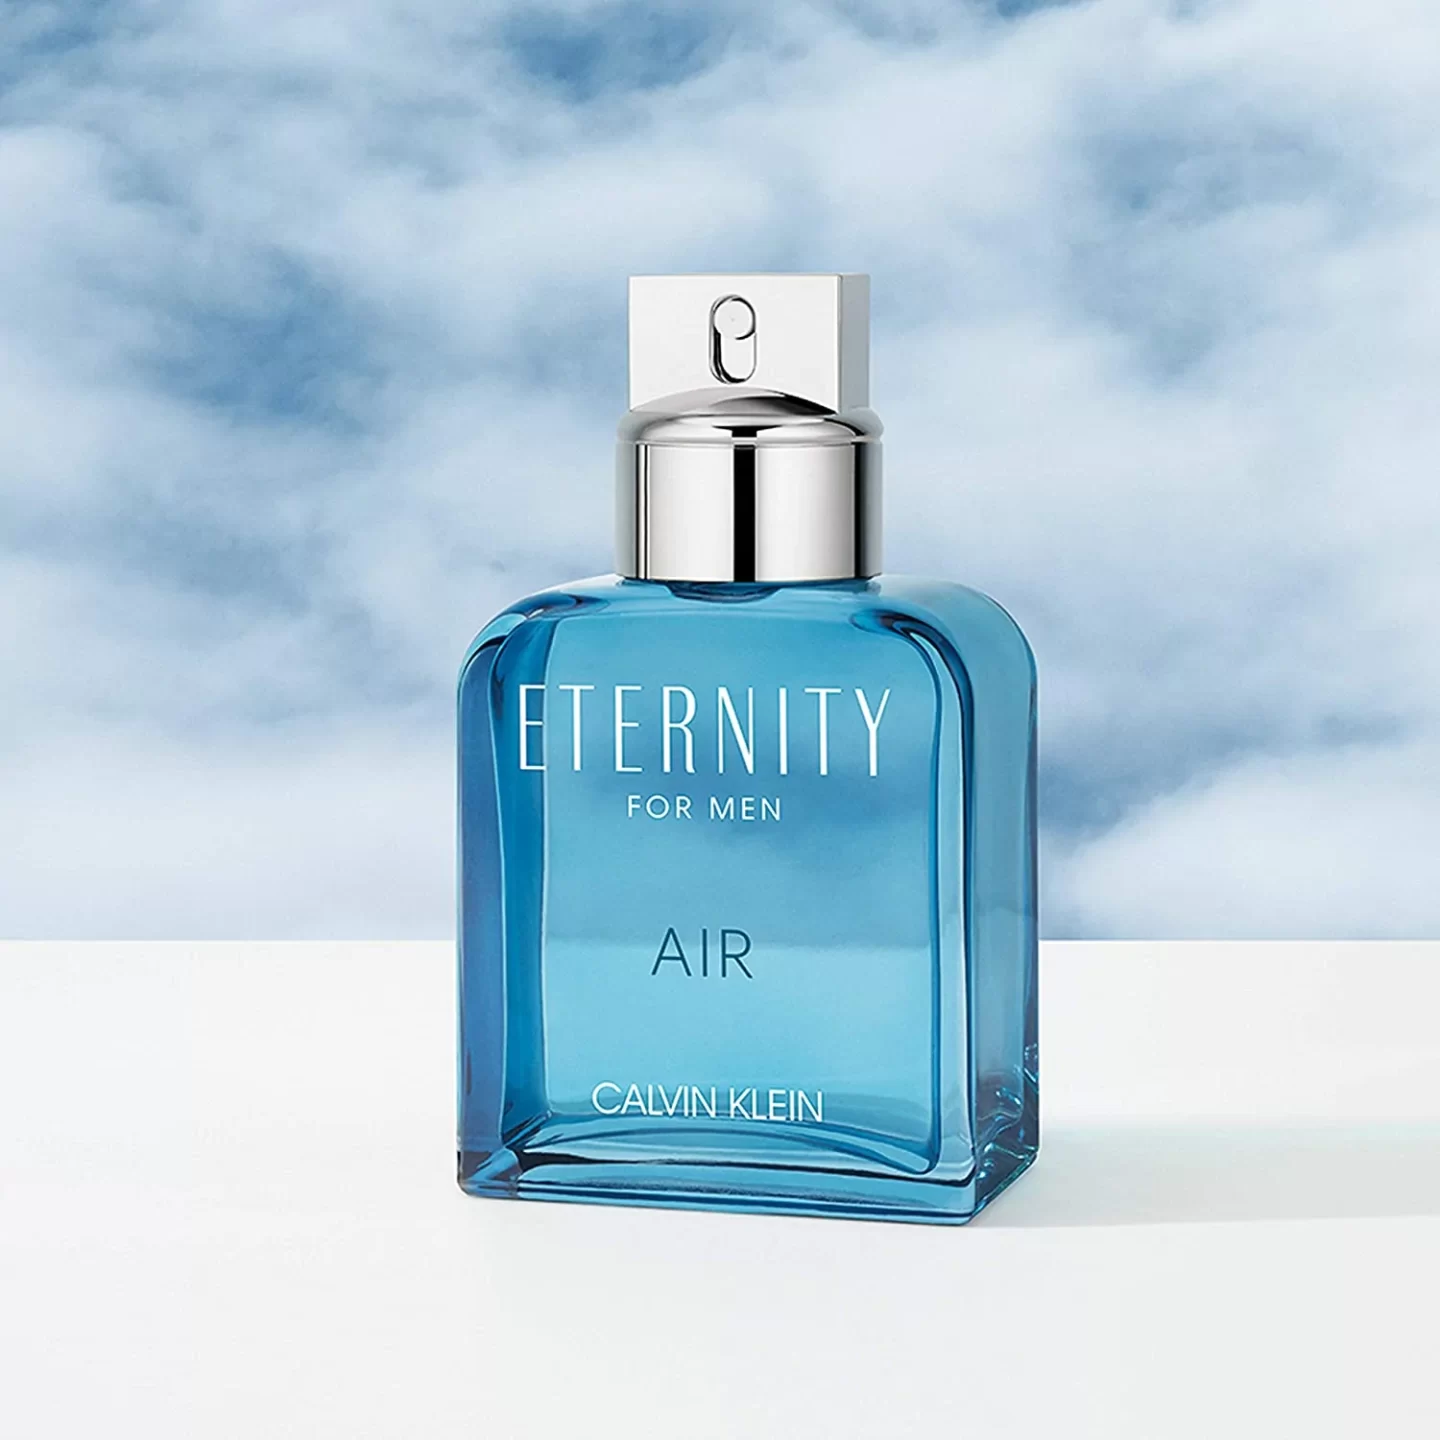 Calvin Klein Eternity Air For Men
The Best Aquatic & Oceanic Perfumes